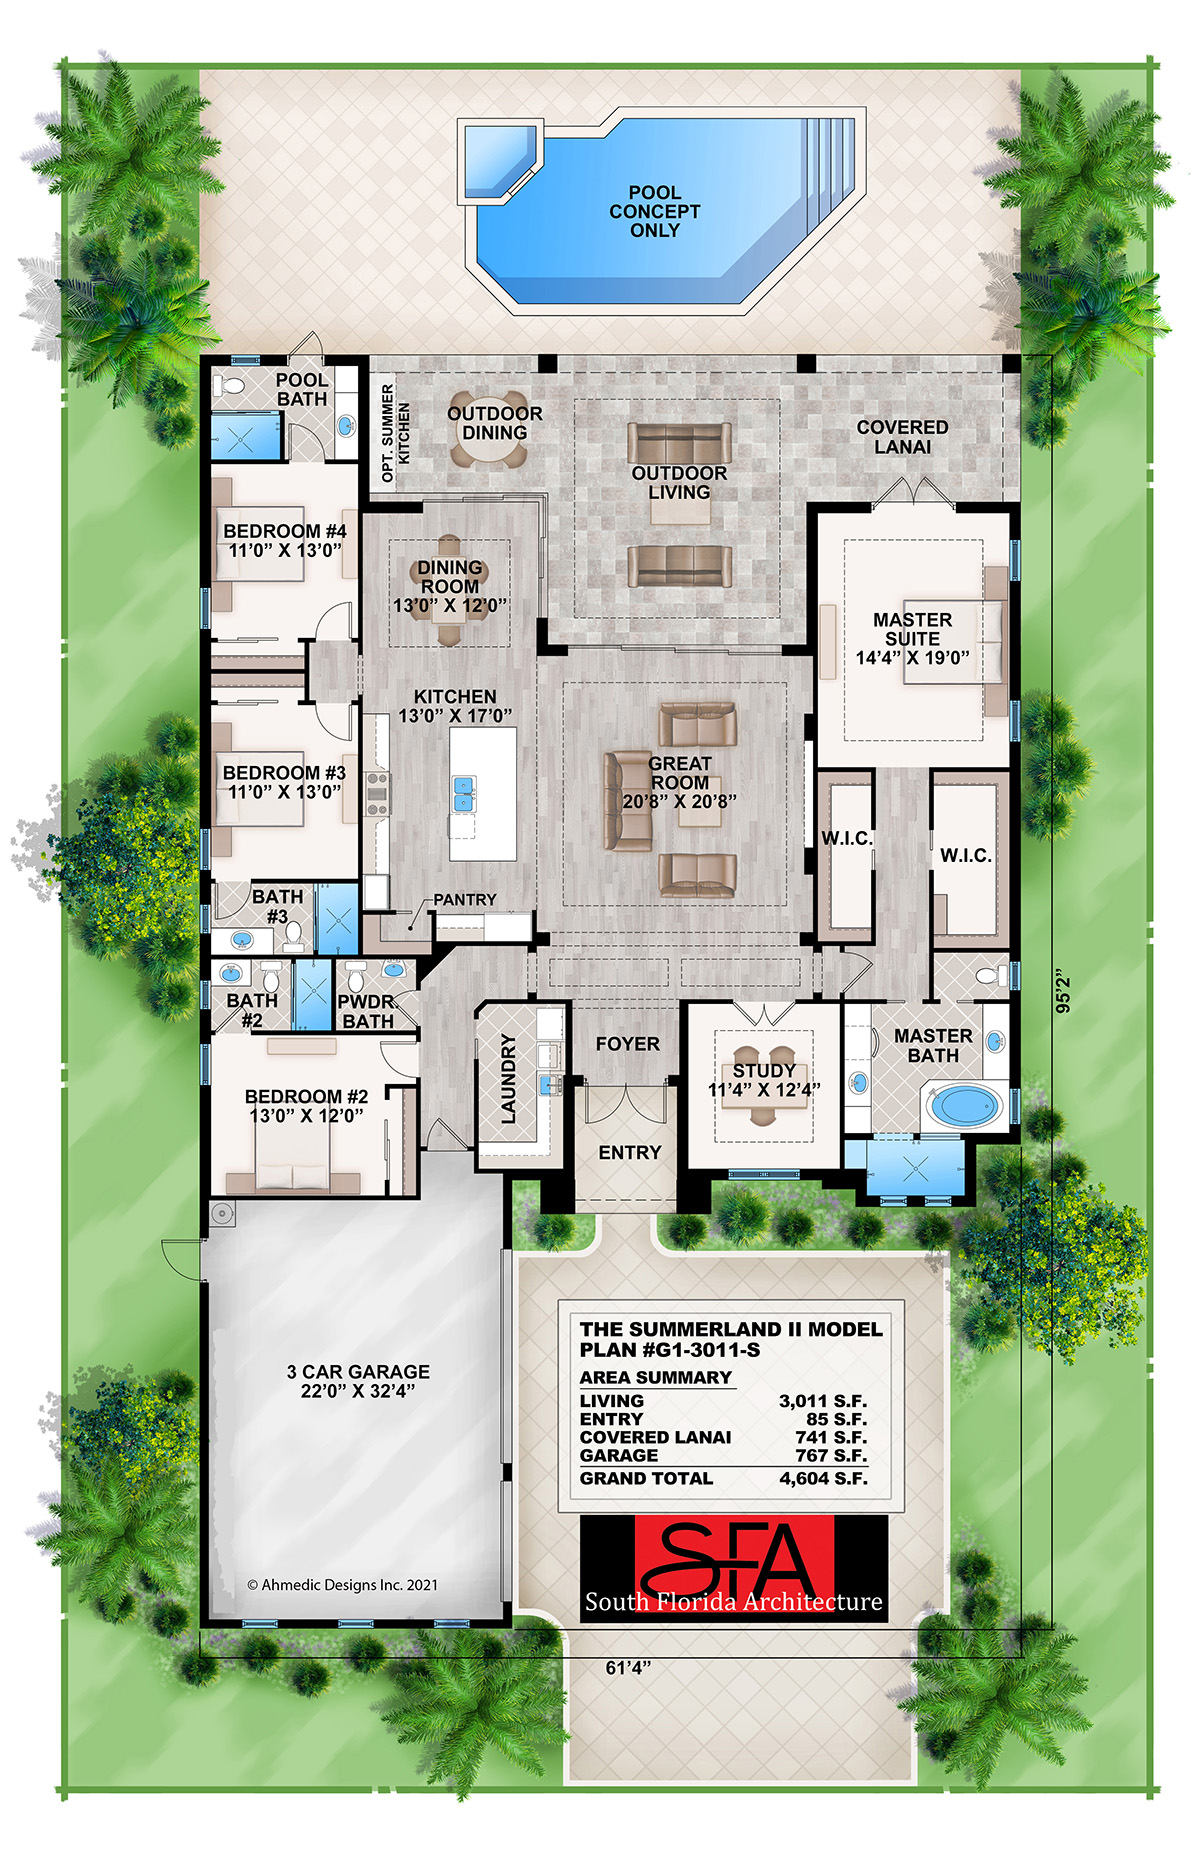 Summerland-2 Floor Plan